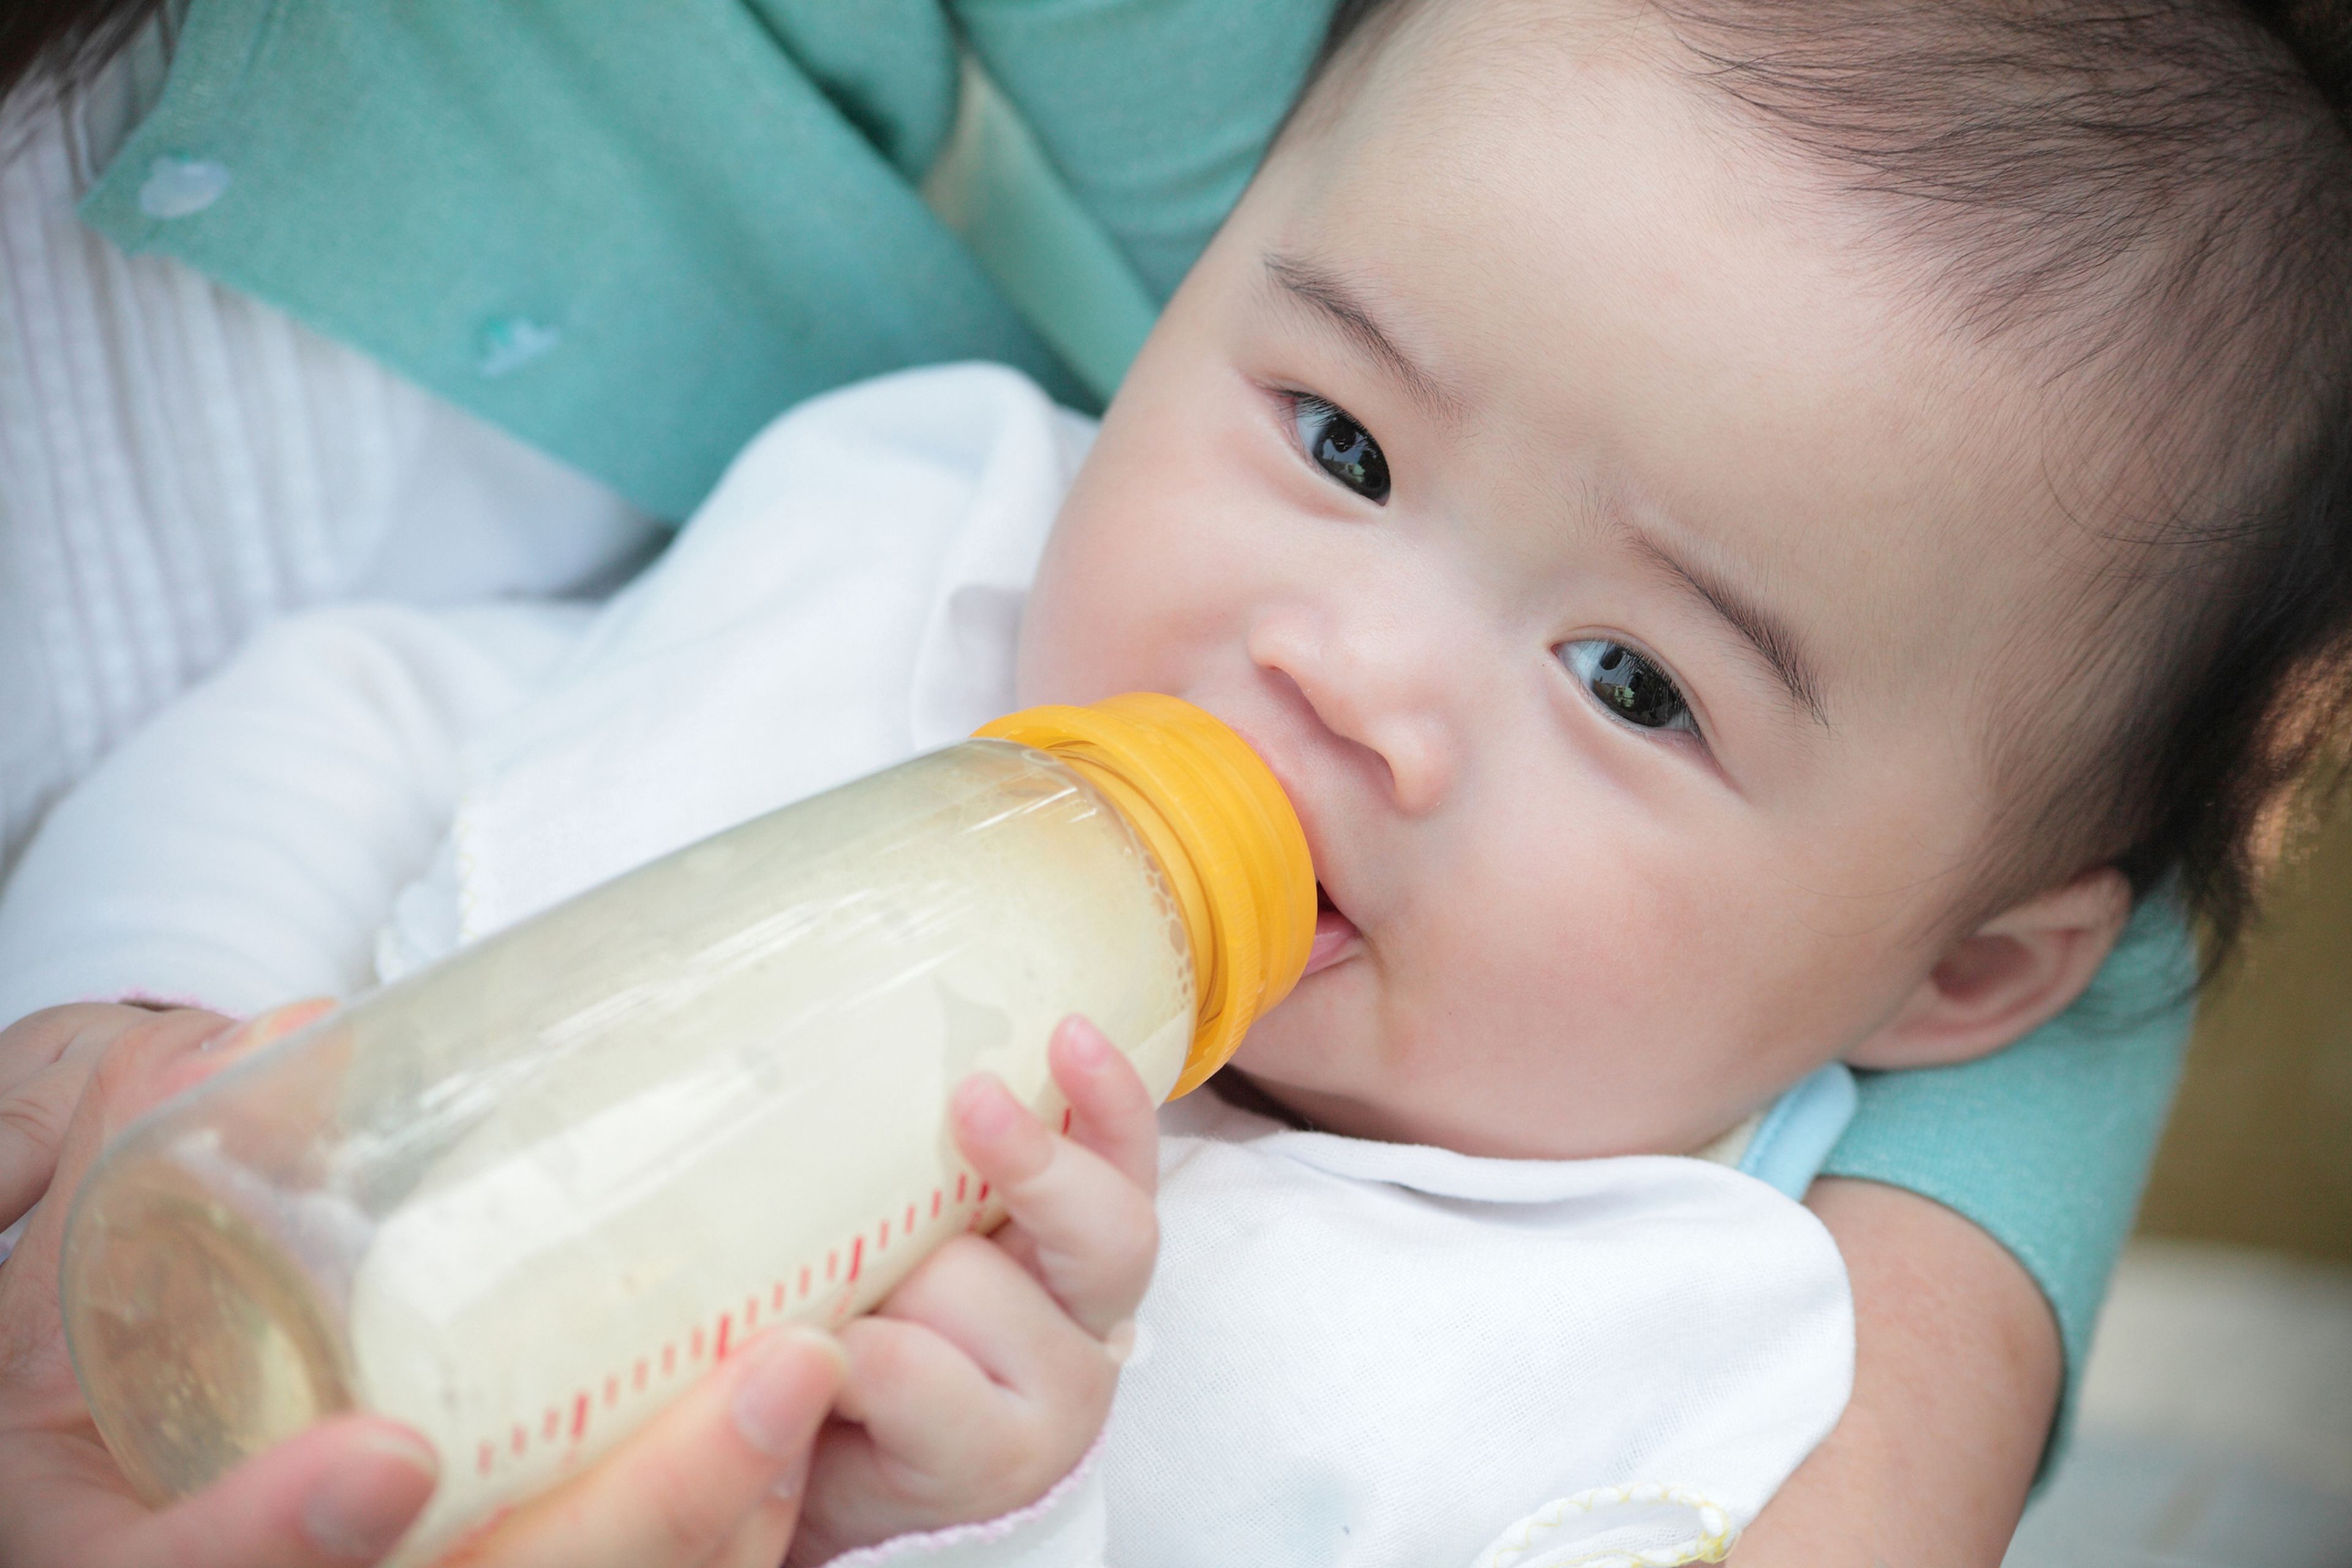 Casos de contaminación alimentaria: en China se intoxicaron muchos niños por leche contaminada con melamina